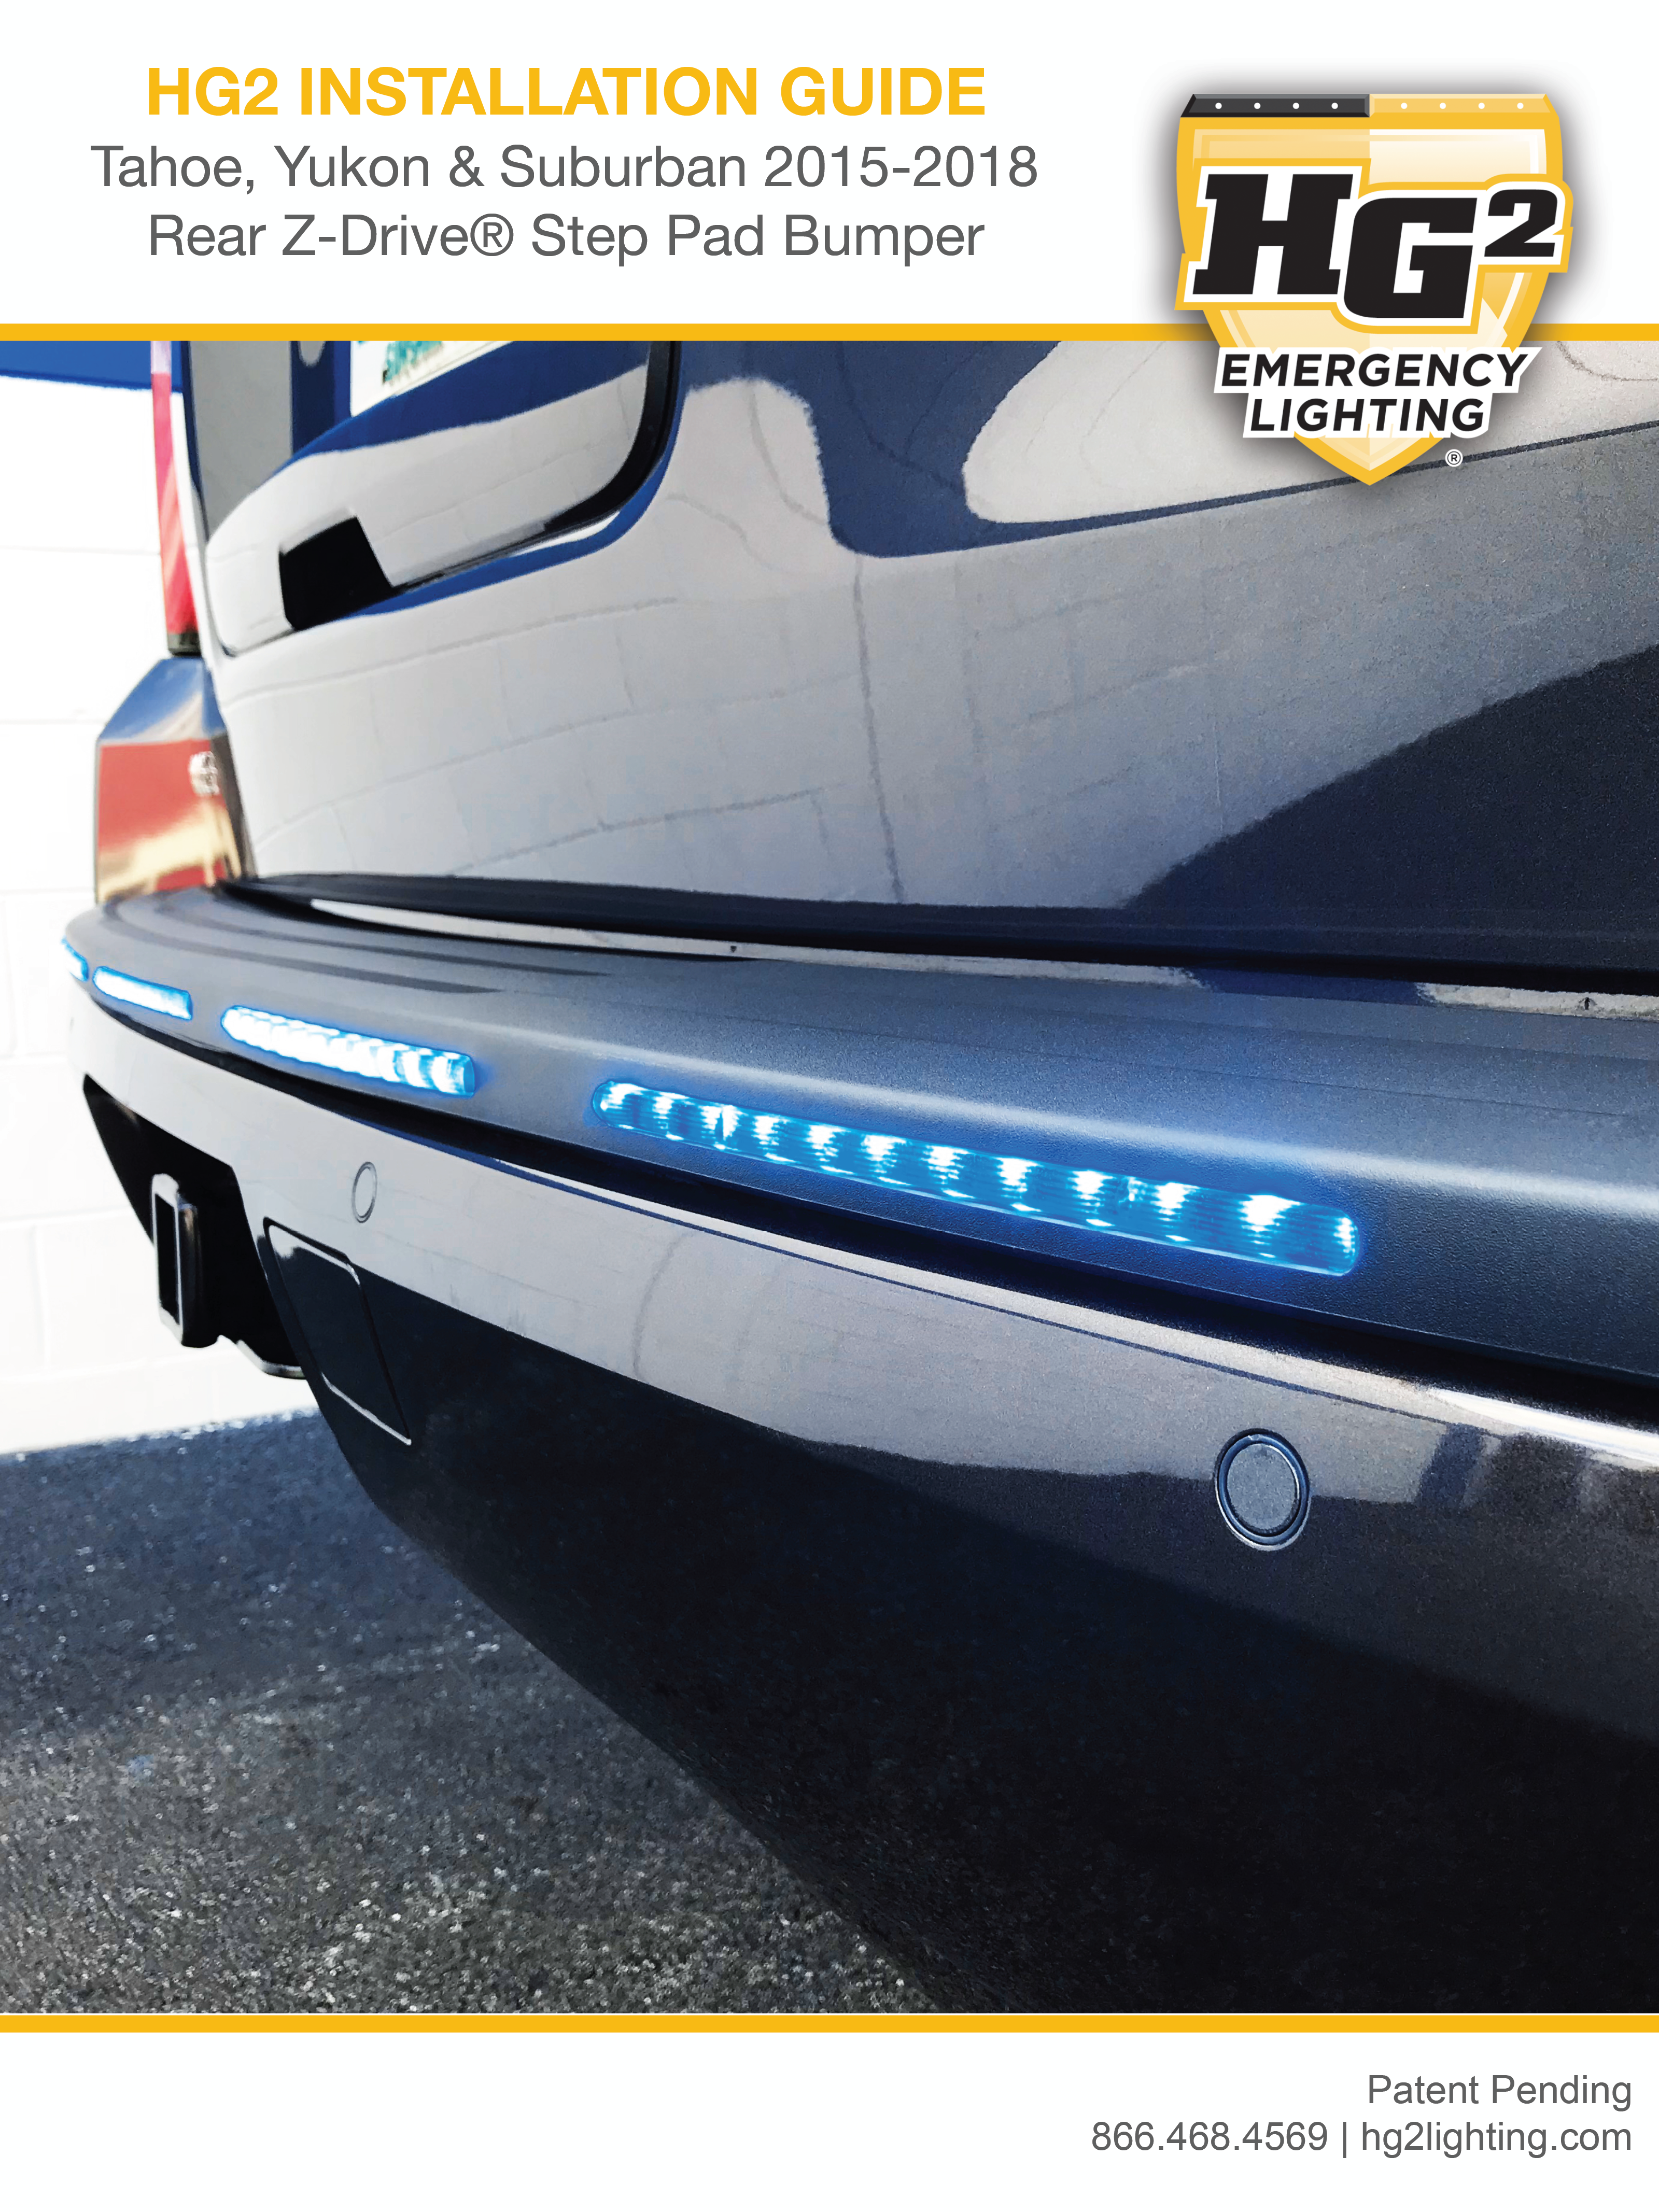 hg2 emergency lighting - tahoe - rear z drive step pad bumper - install guide